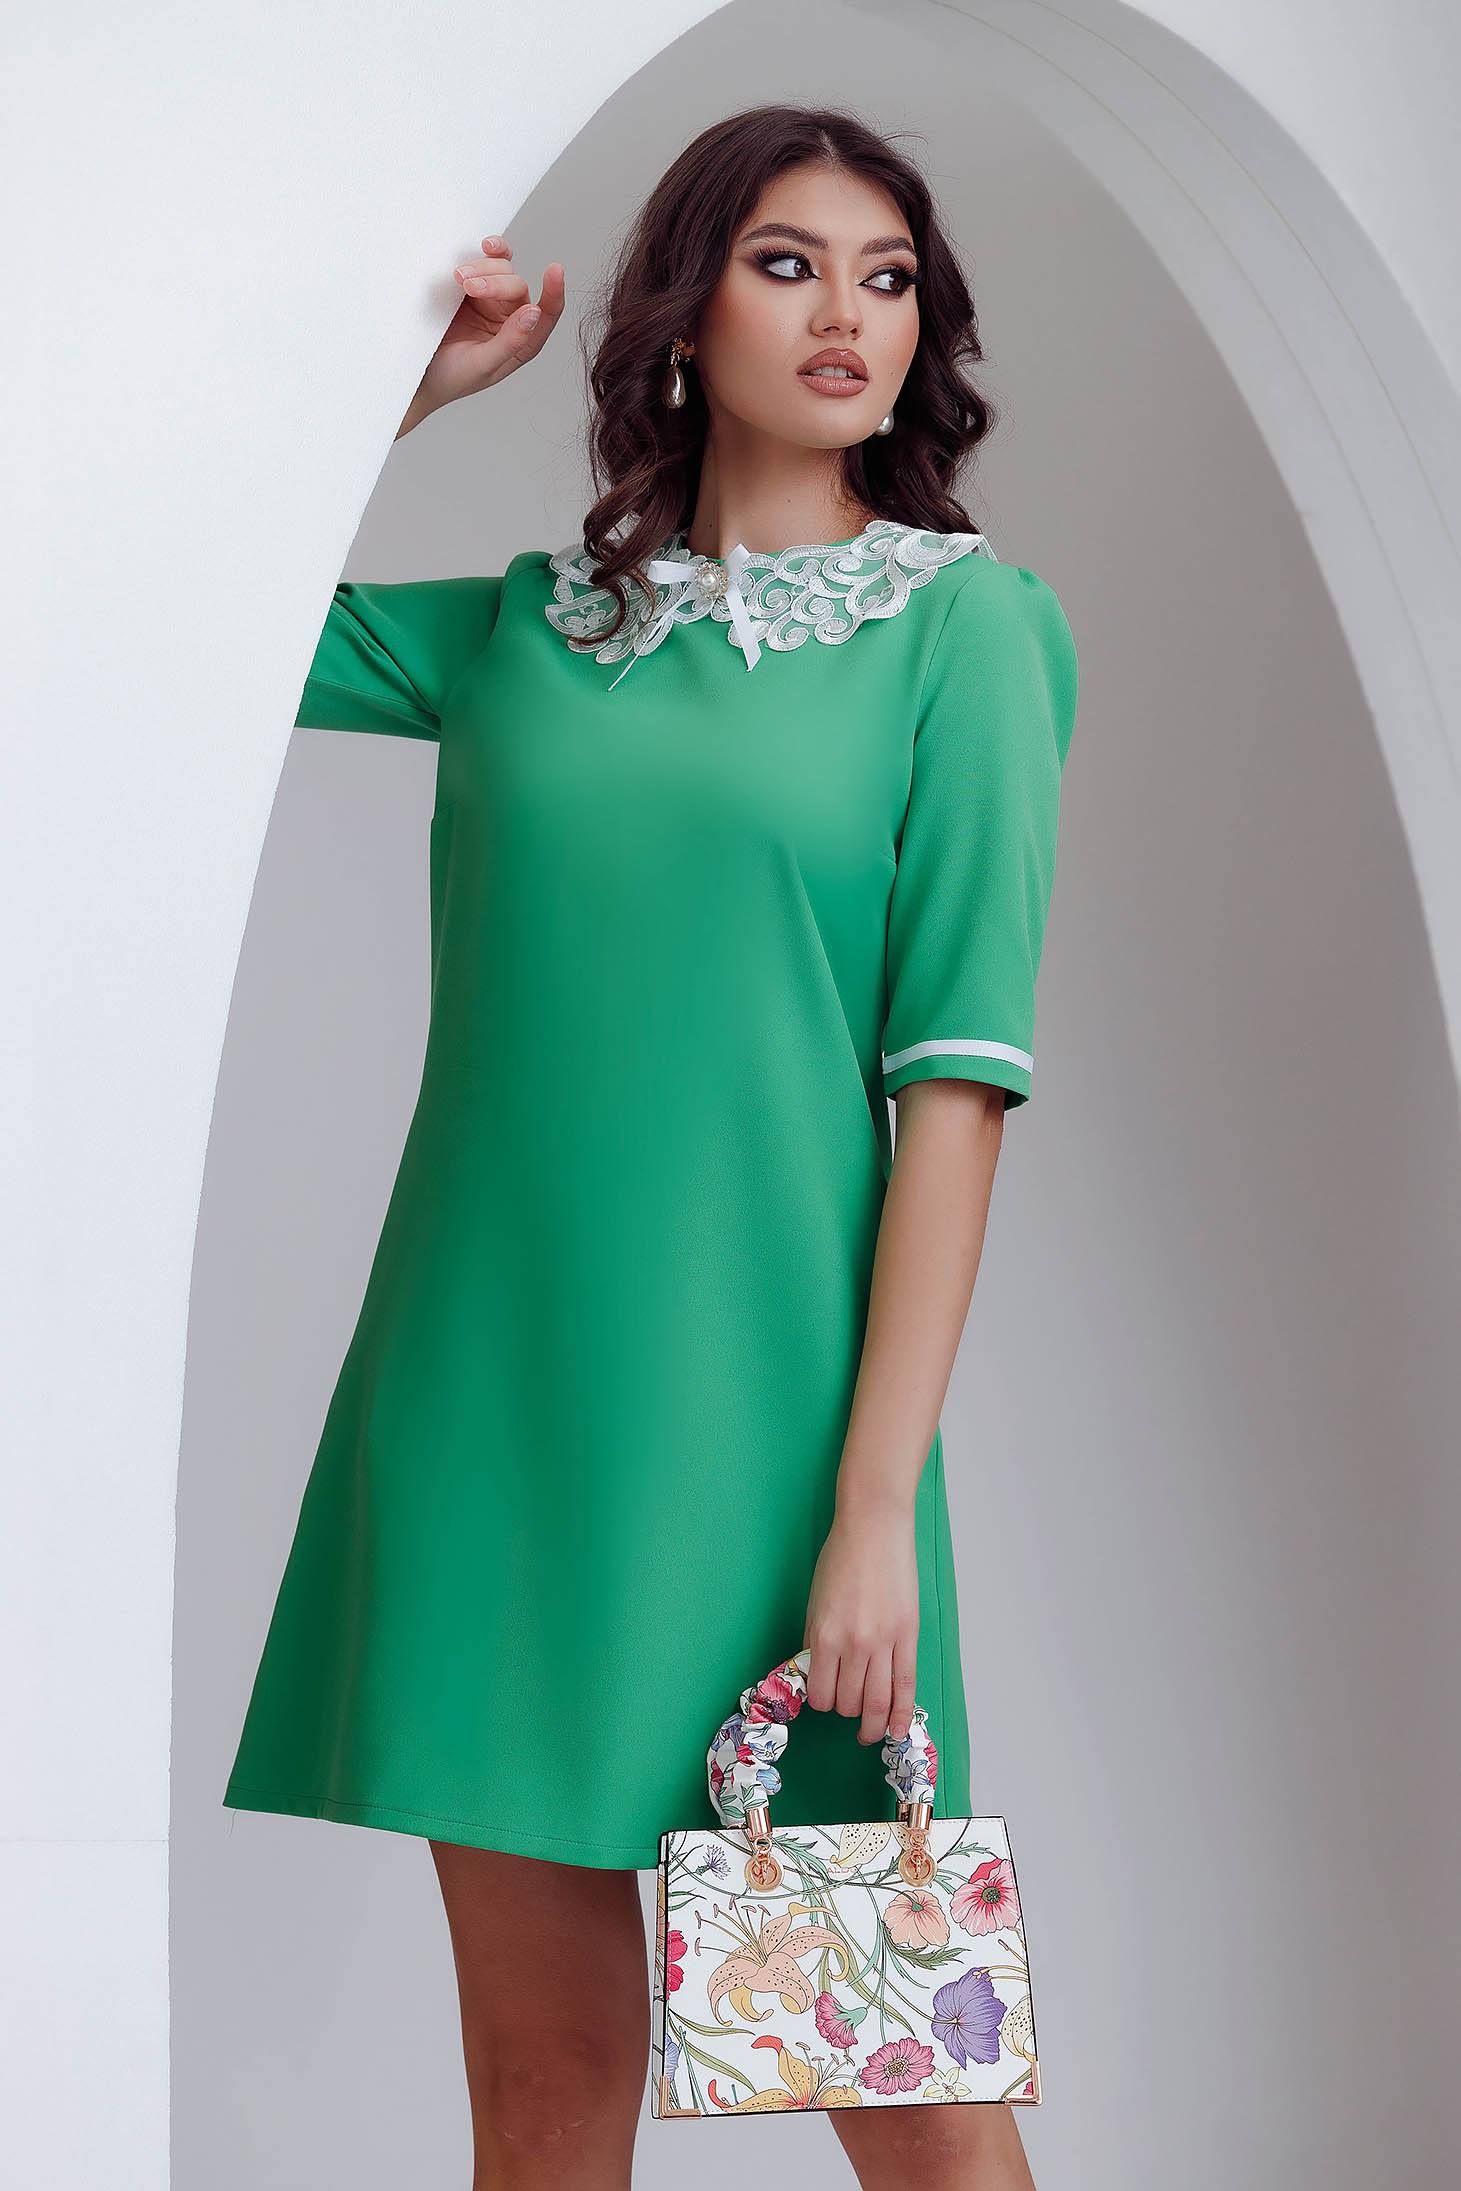 Green dress slightly elastic fabric short cut a-line